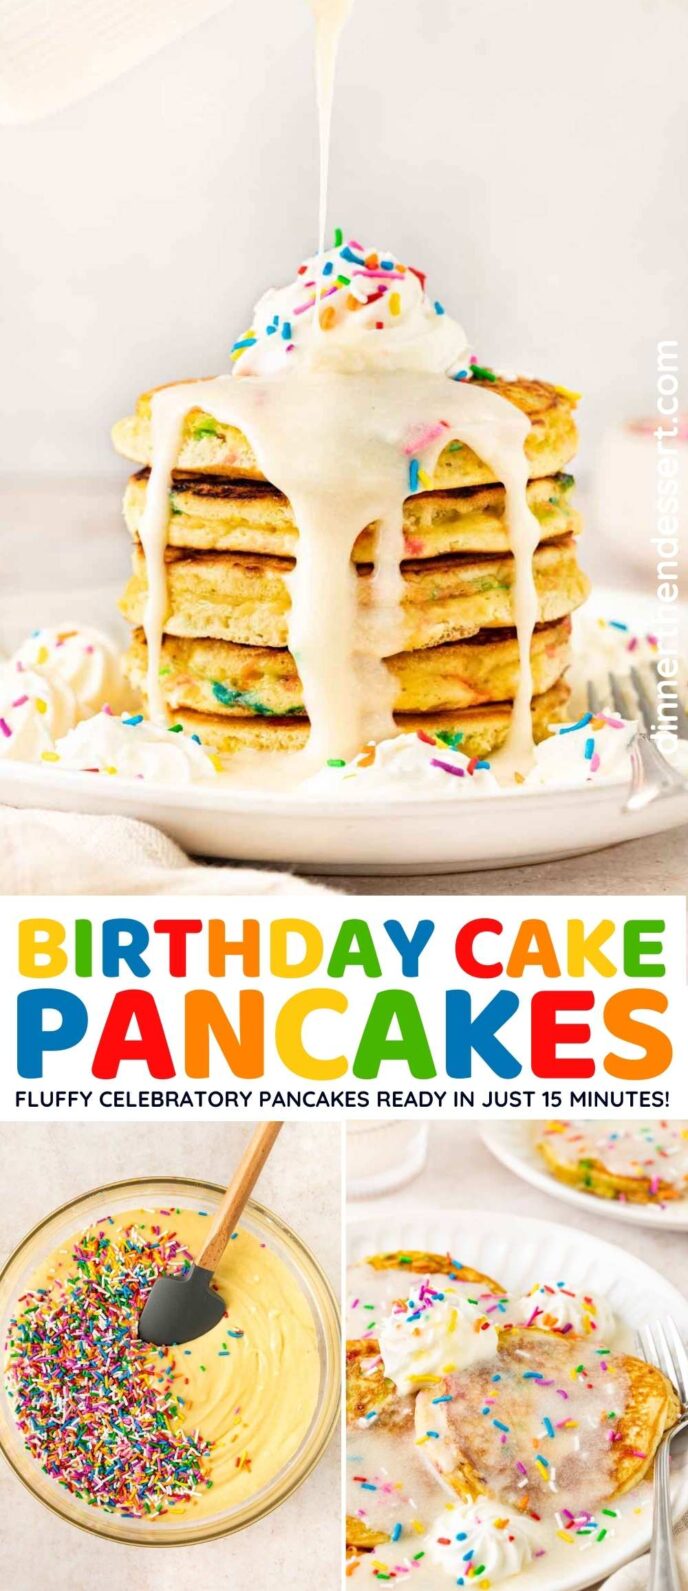 Birthday Cake Pancakes collage